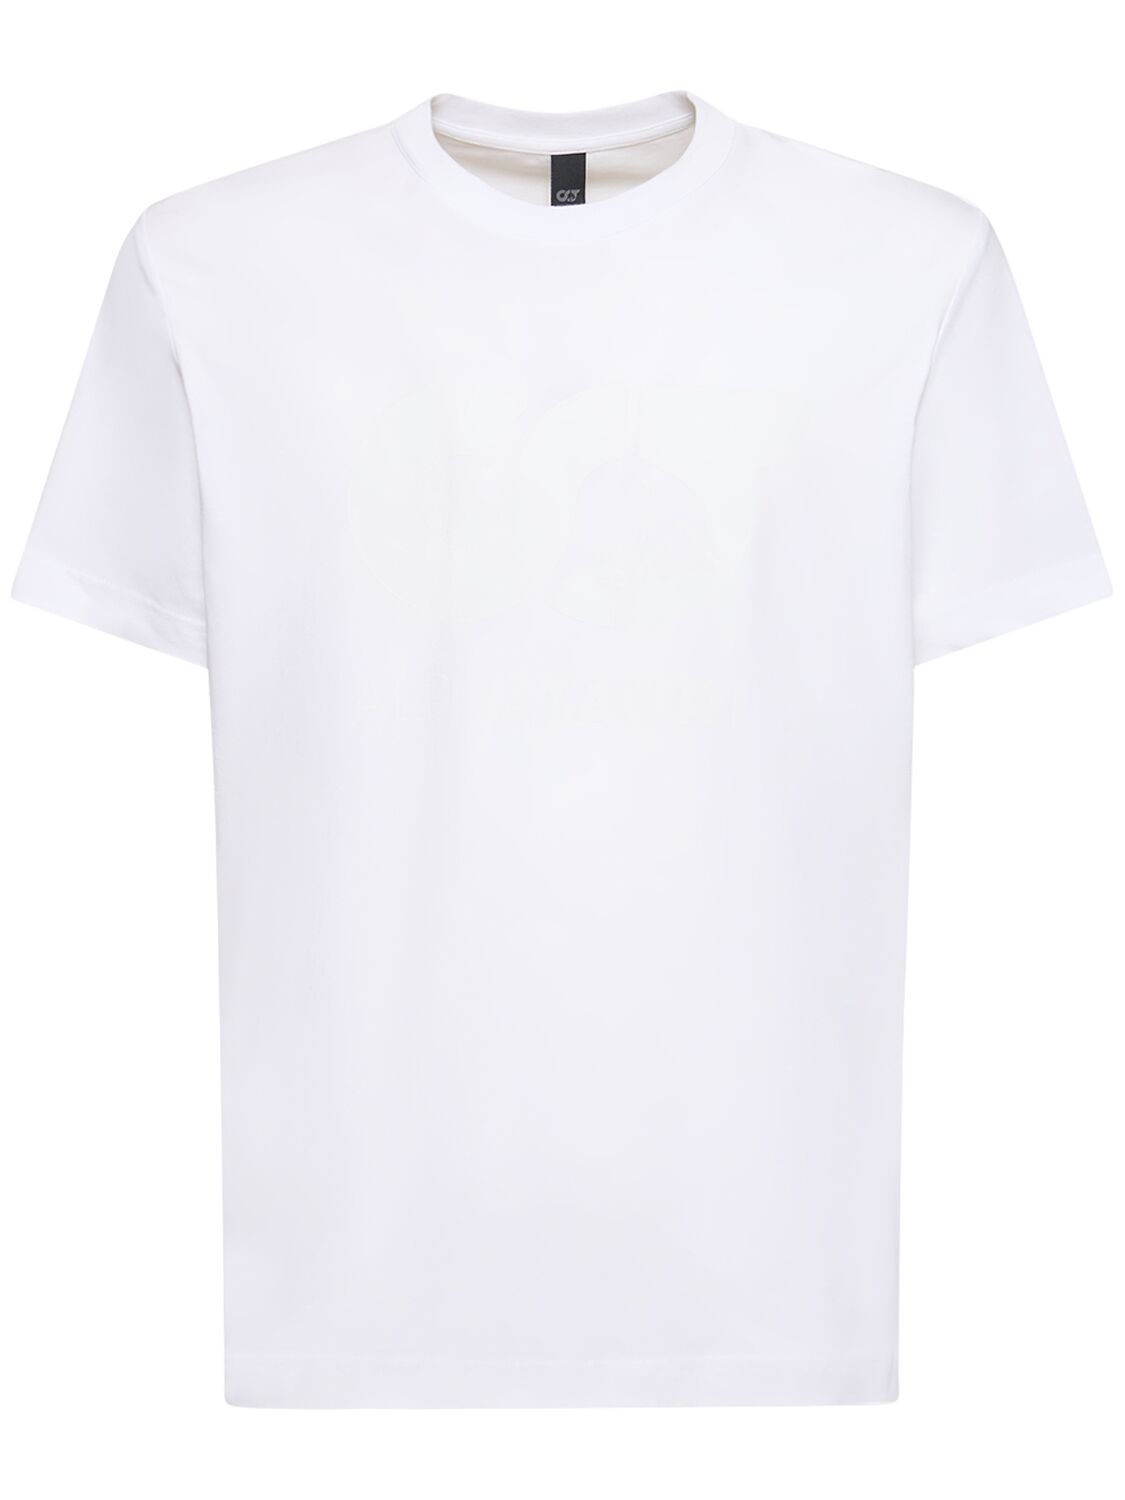 Hombre Camiseta Estampada S - ALPHATAURI - Modalova